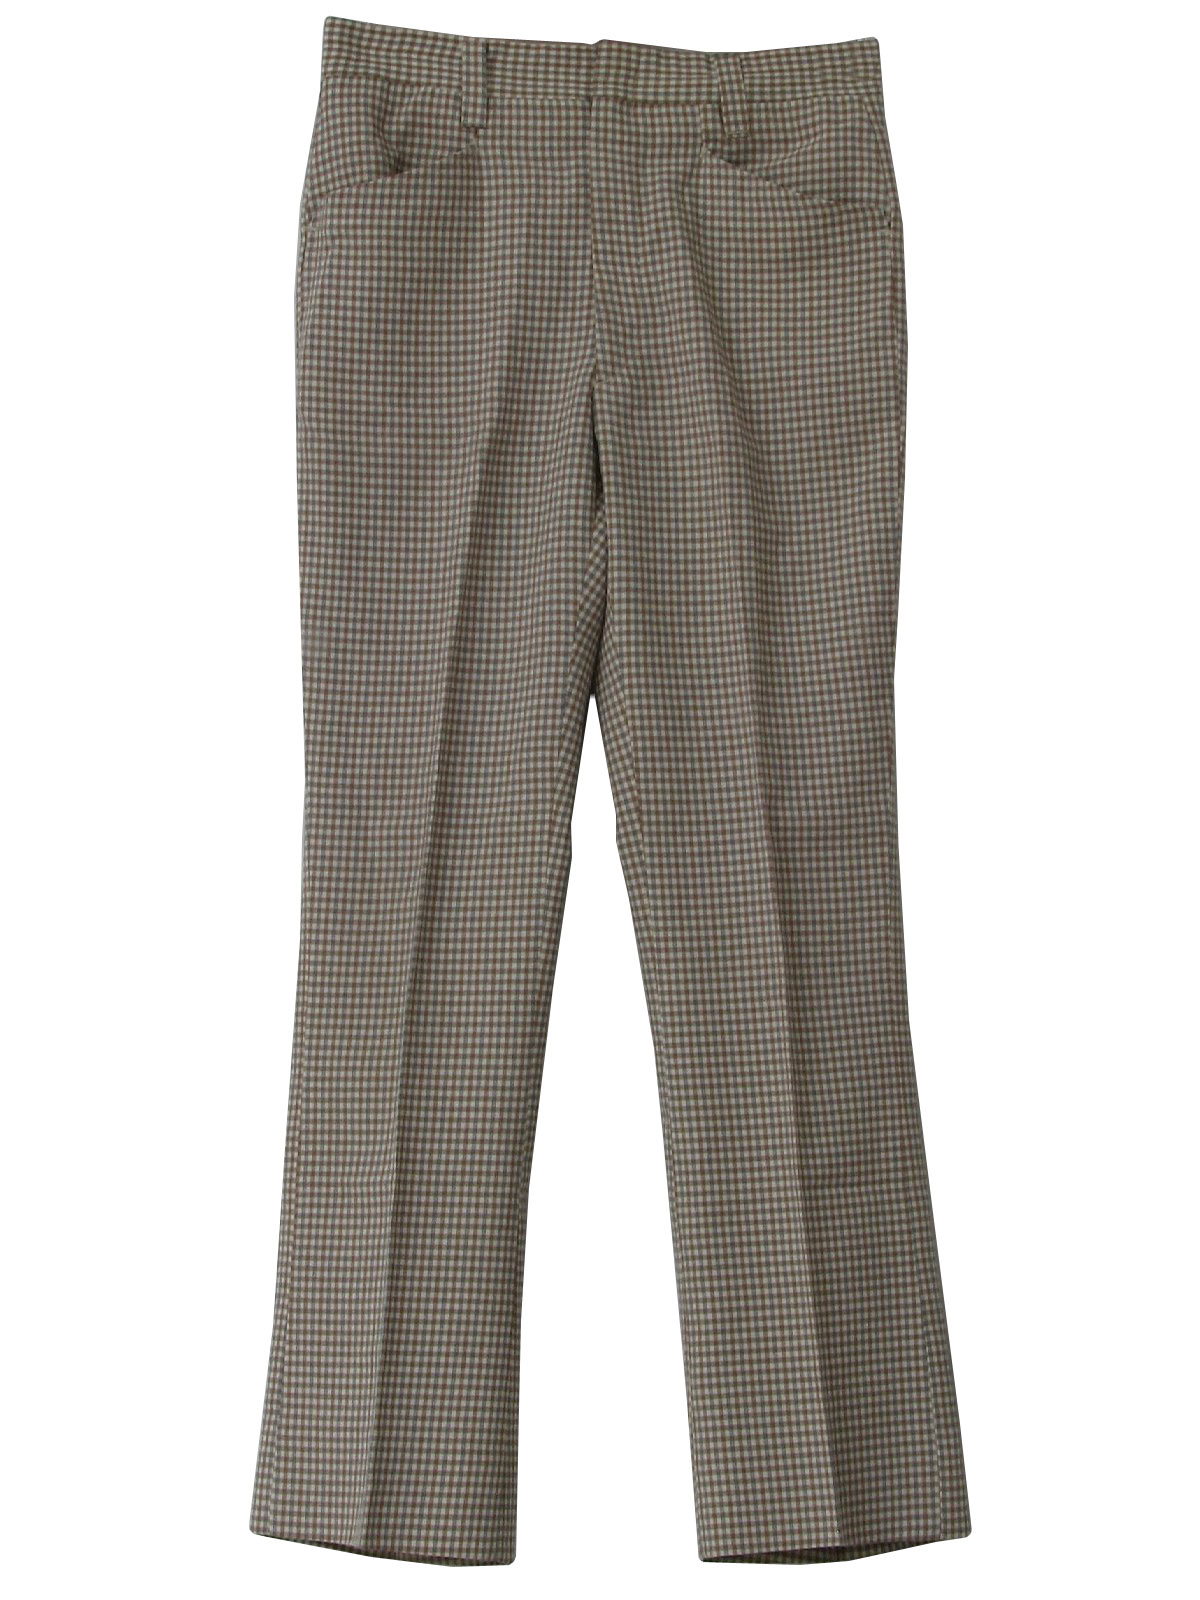 1960's Pants (Haggar): Late 60s or early 70s -Haggar- Mens light brown ...